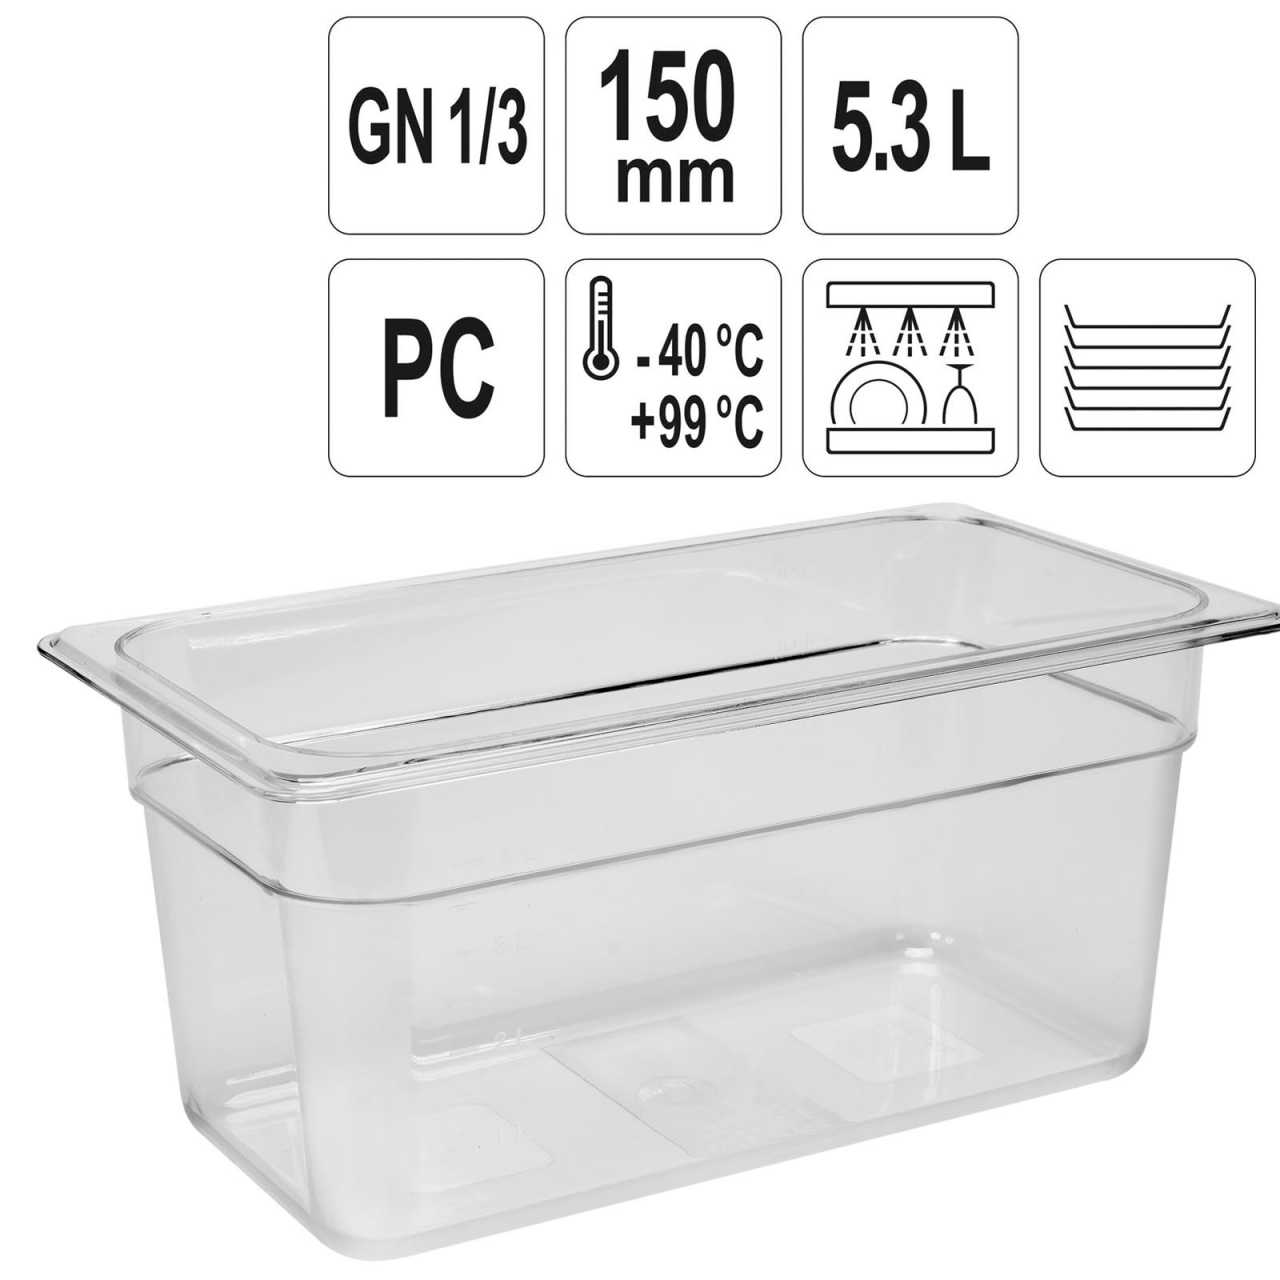 YATO Profi GN Gastronorm Behälter Kunststoff 1/3 150mm YG-00412